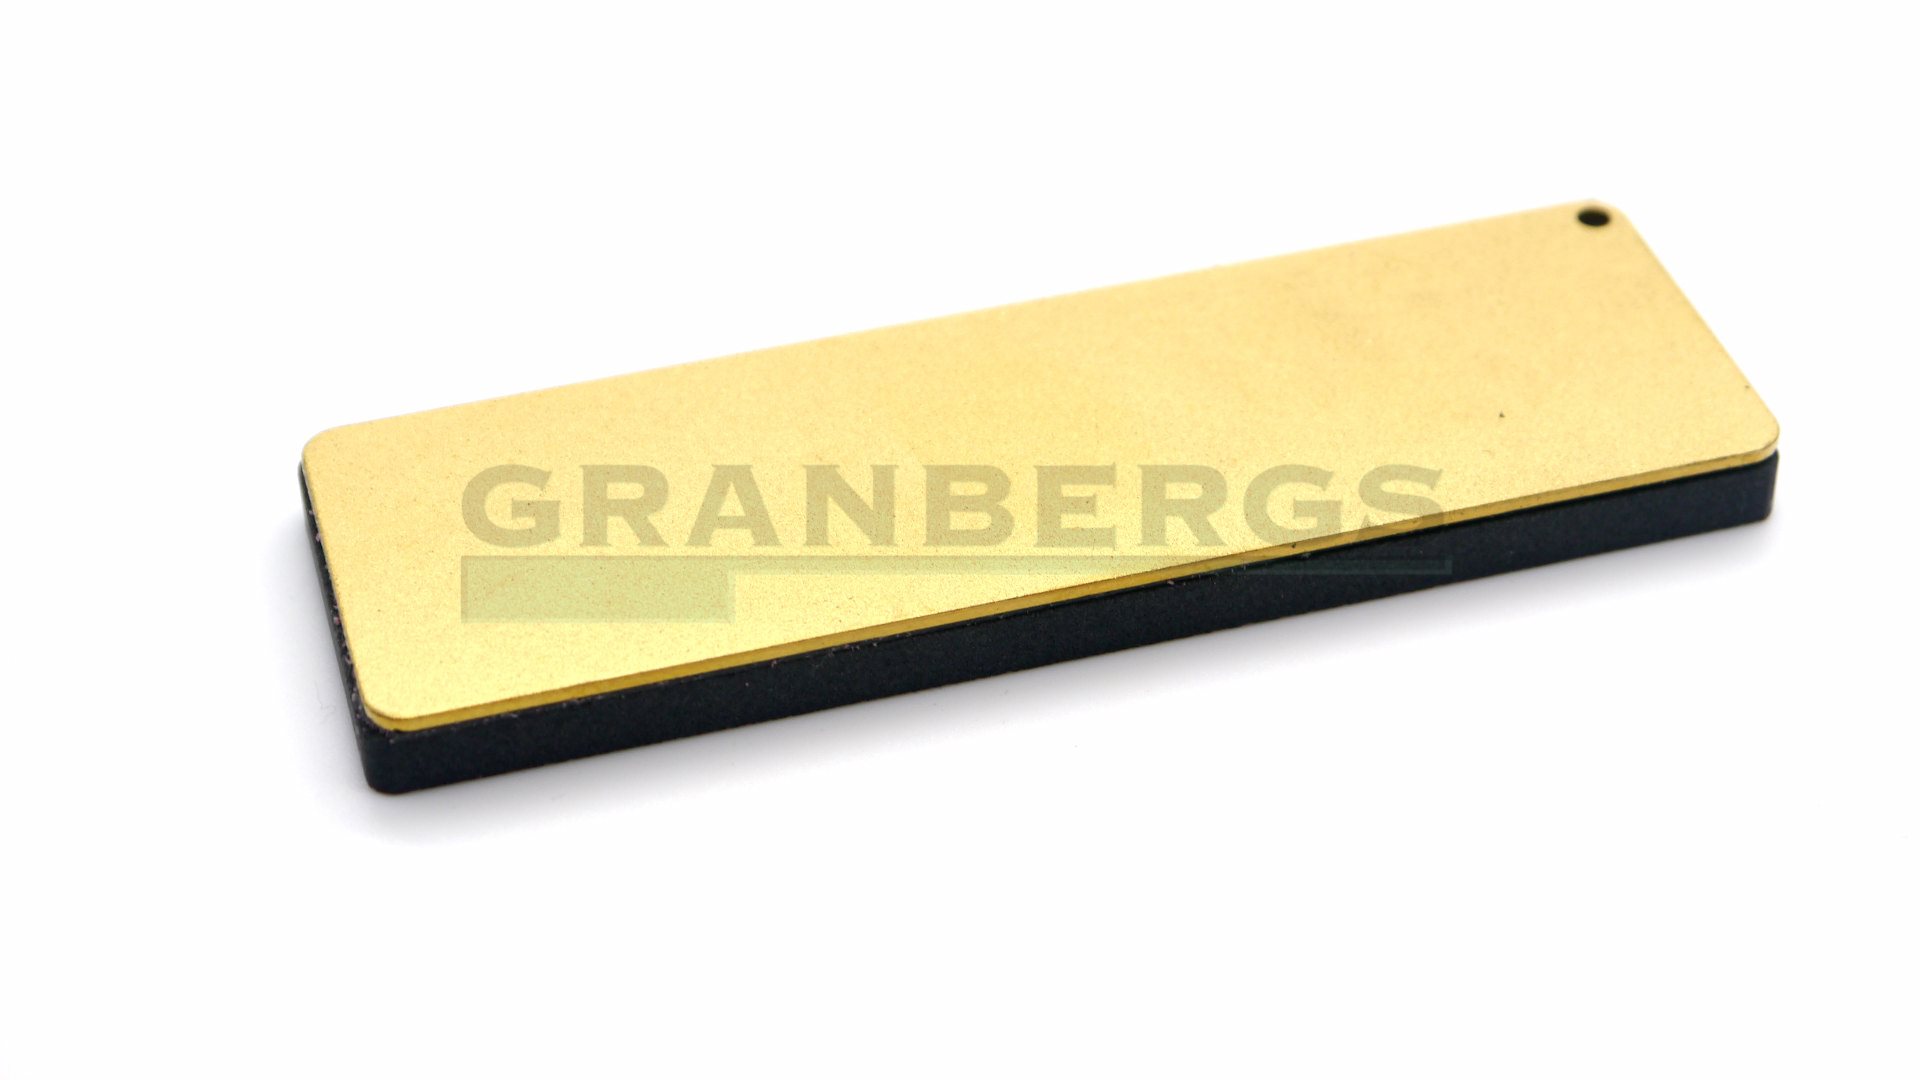 https://granbergs.com.au/getattachment/Products/Knives-Outdoors/Fallkniven-DC4-Diamond-Ceramic-Whetstone-Knife-Sha/1P1080652Fallkniven-DC4-Sharpener-1920p-Watermark.jpg.aspx